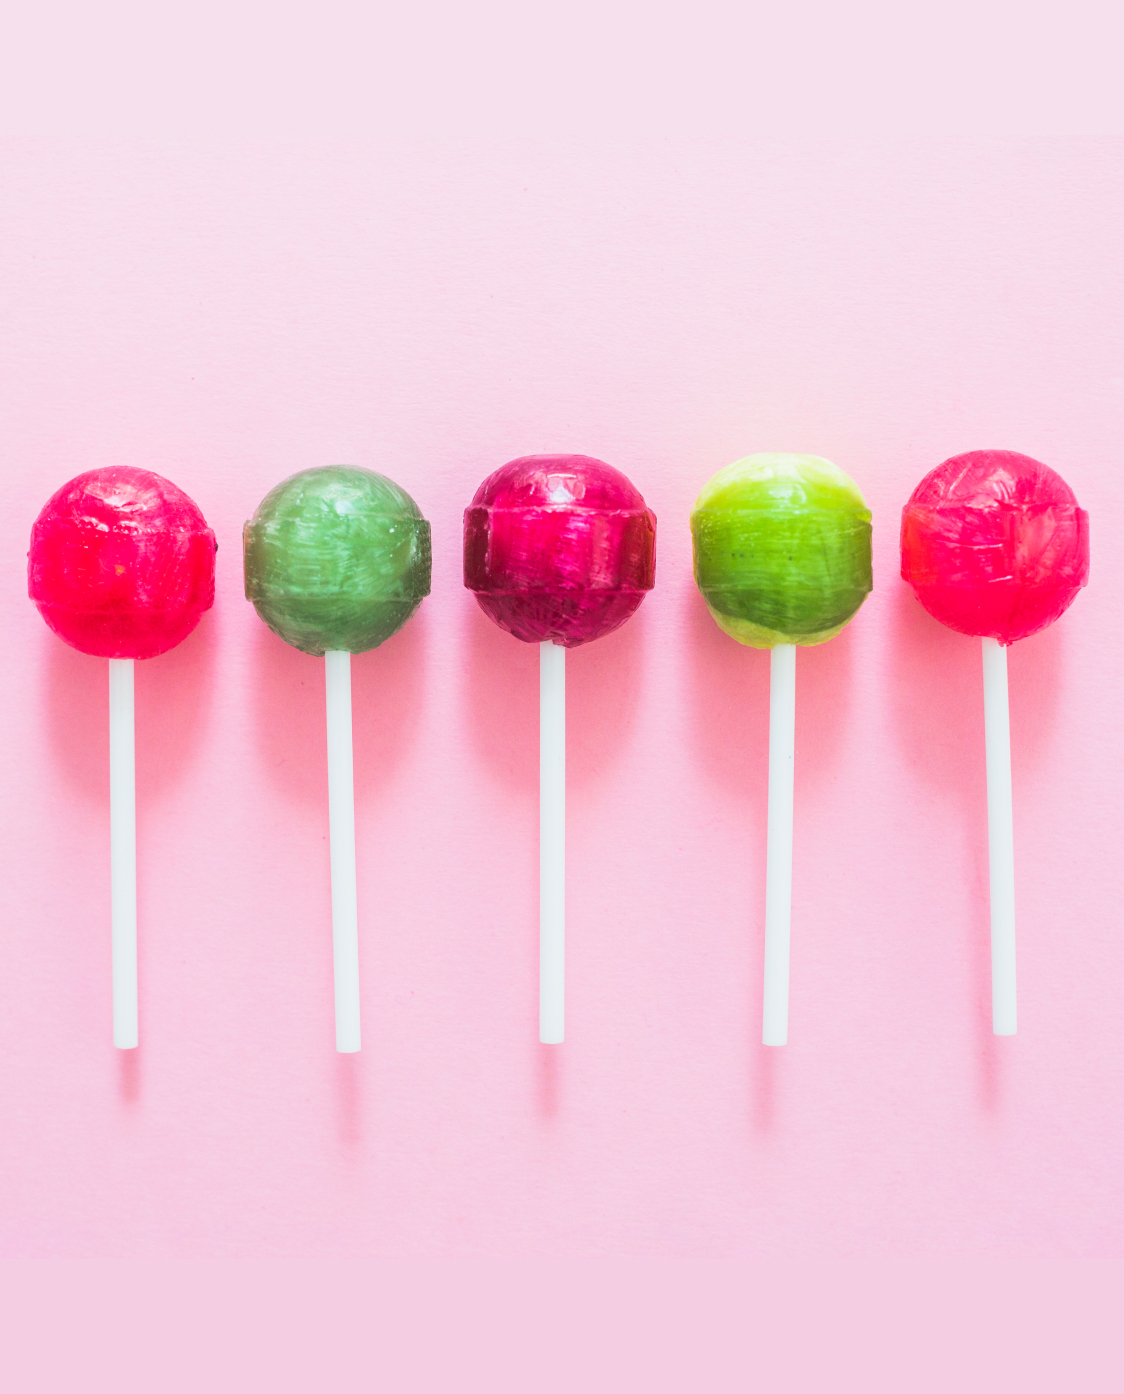 Lollipop for exports